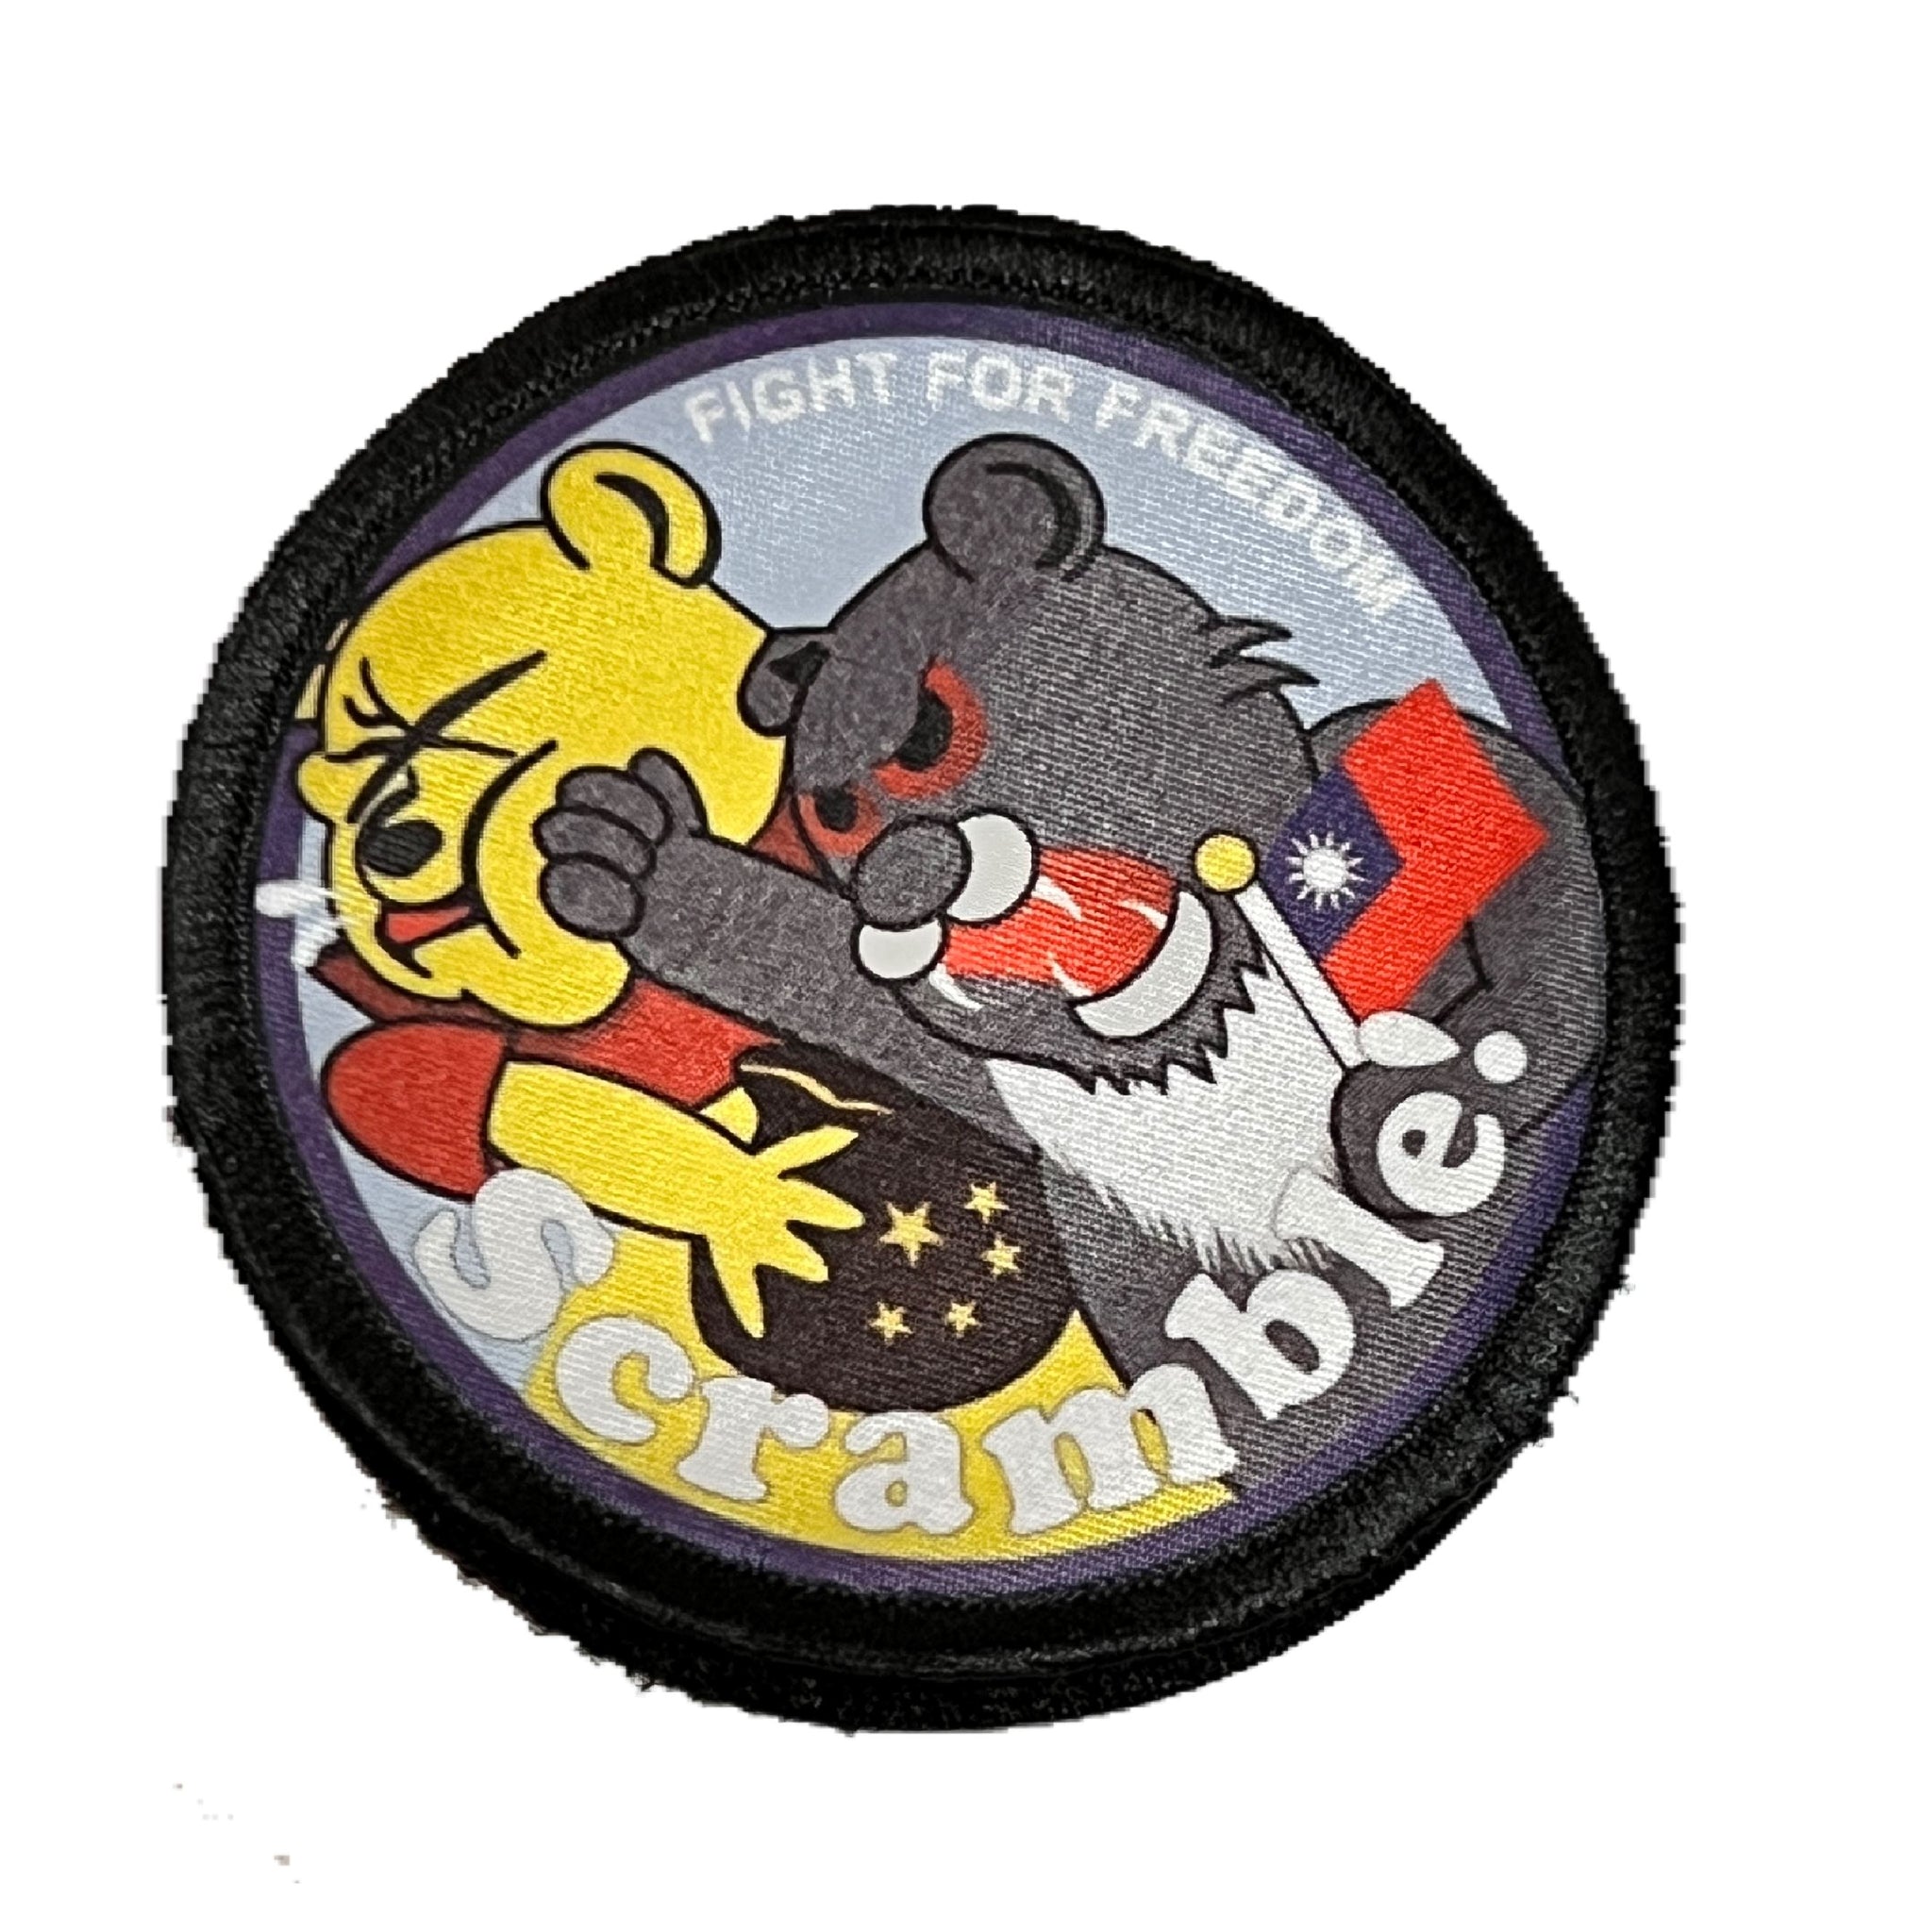 Taiwan air force badges show Winnie the Pooh taking a hit